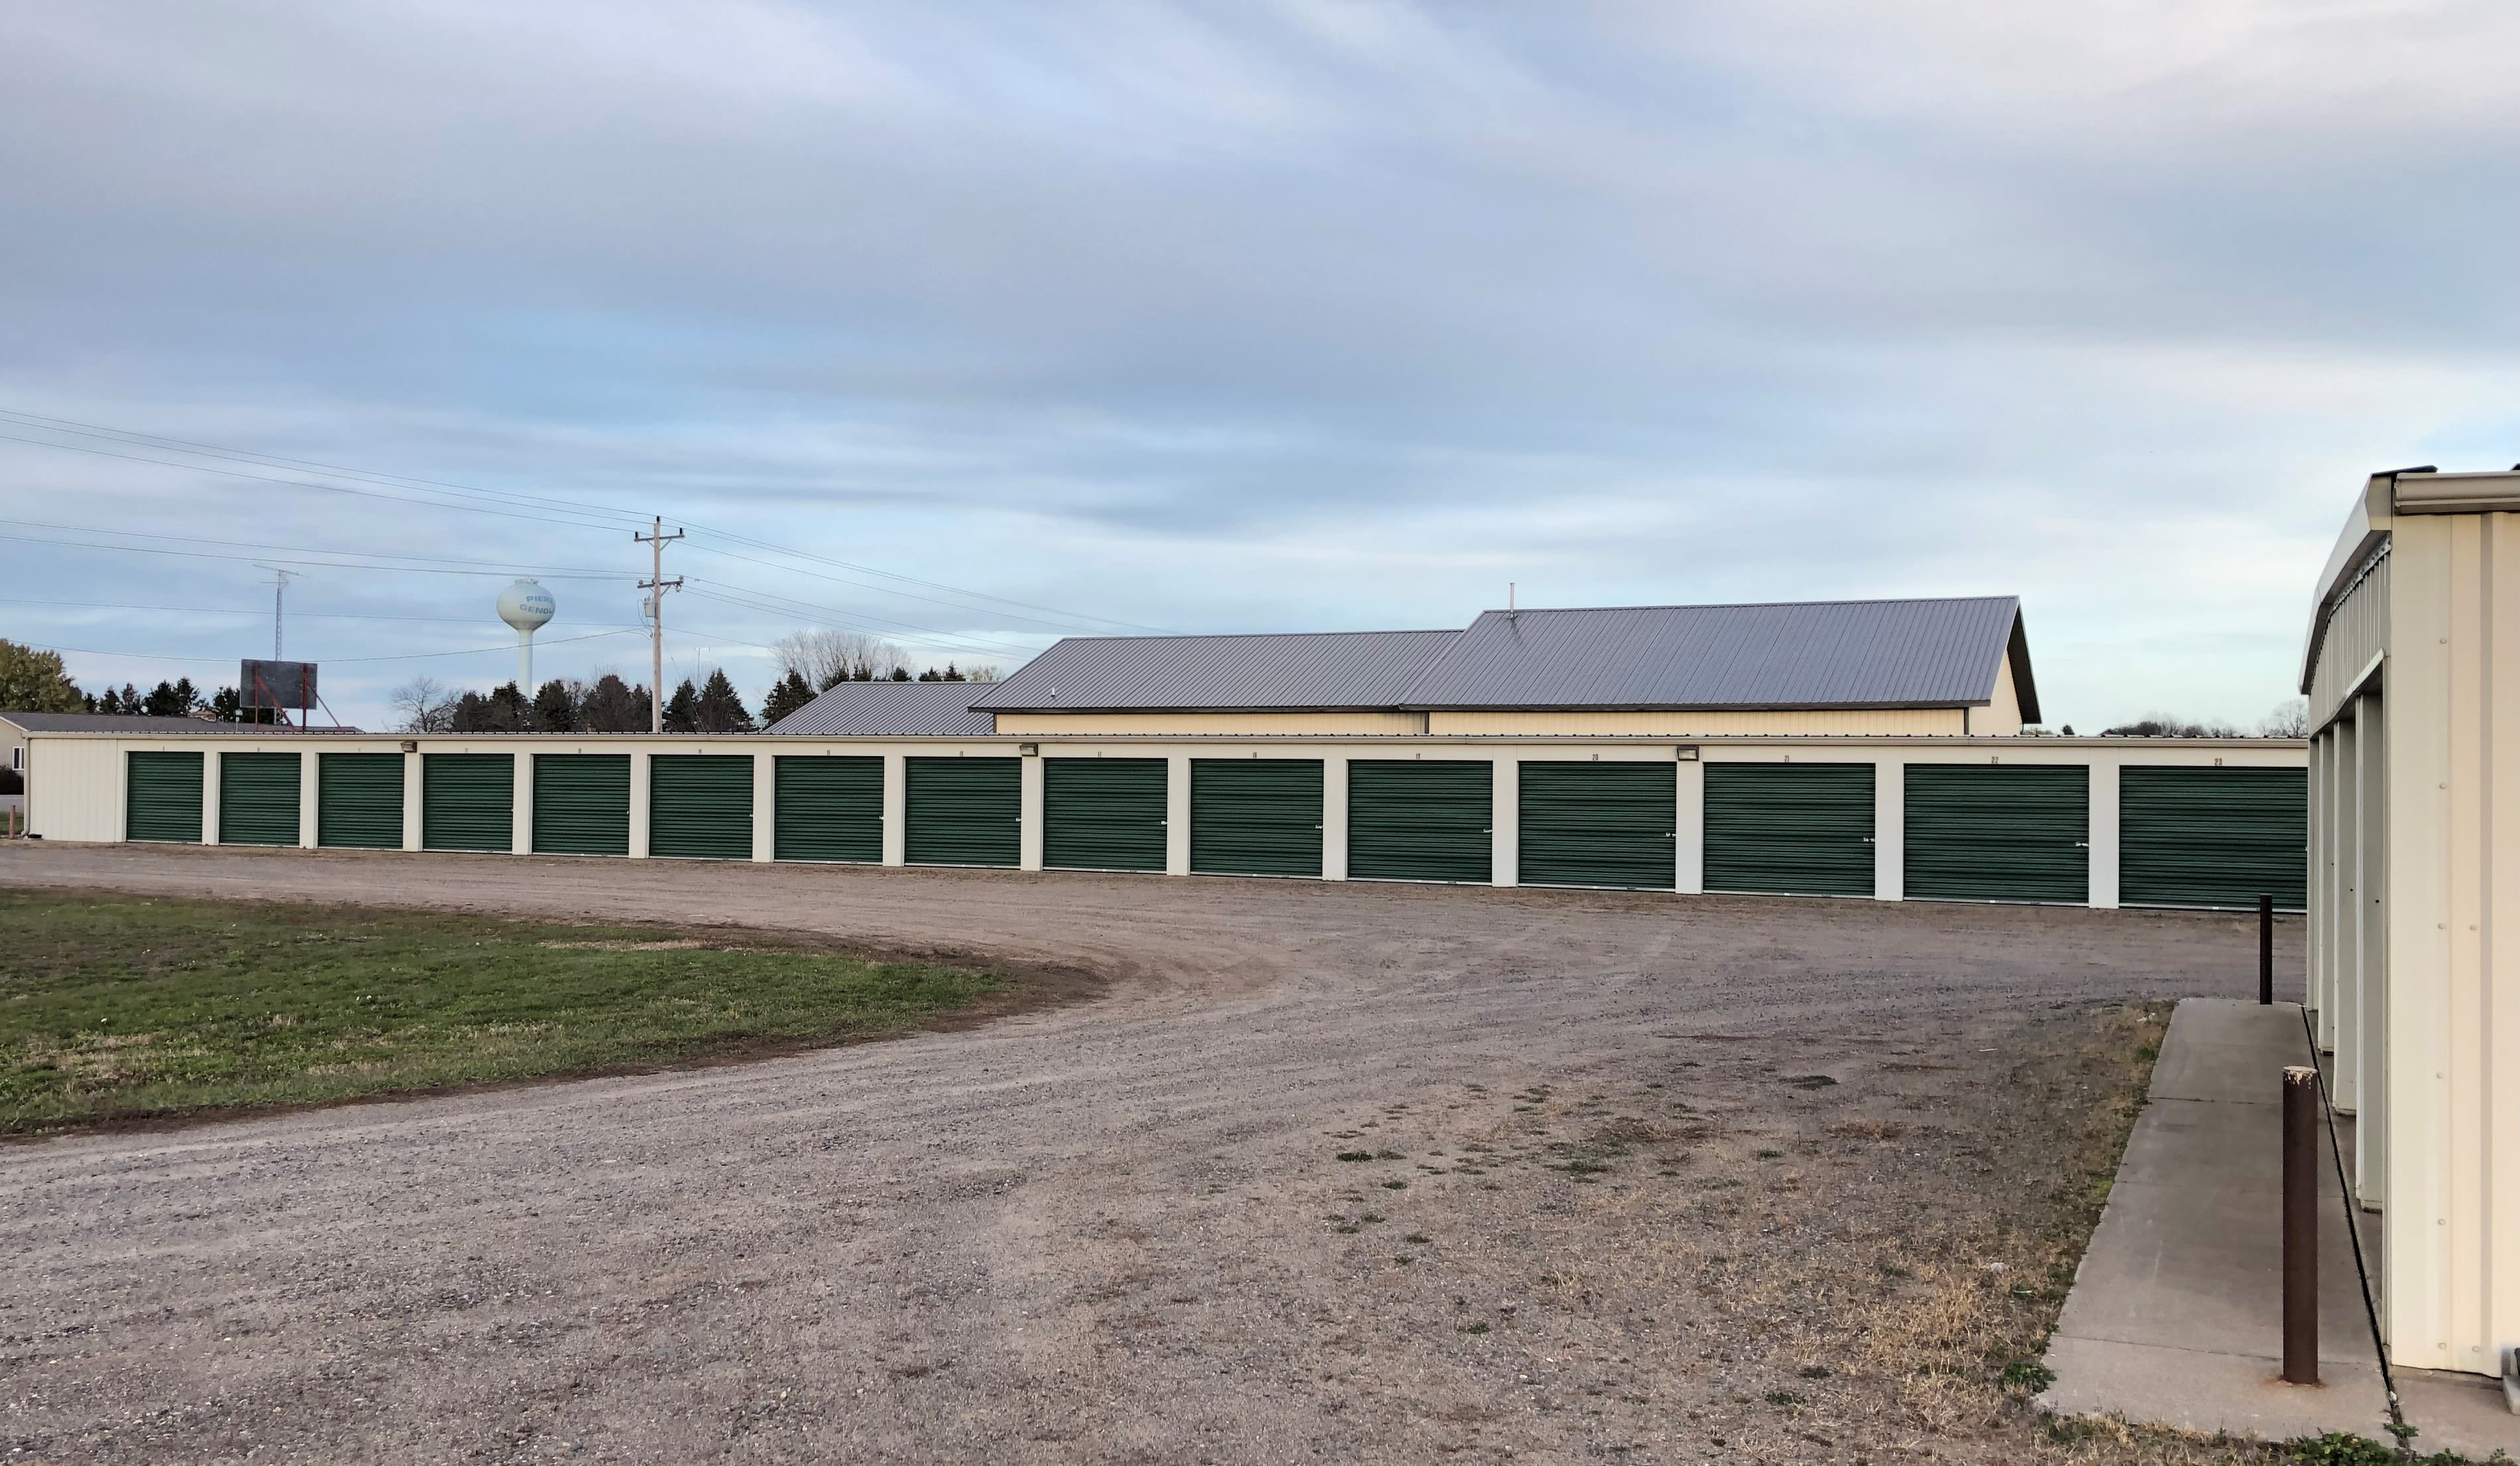 Exterior of outdoor units at KO Storage in Pierz, Minnesota